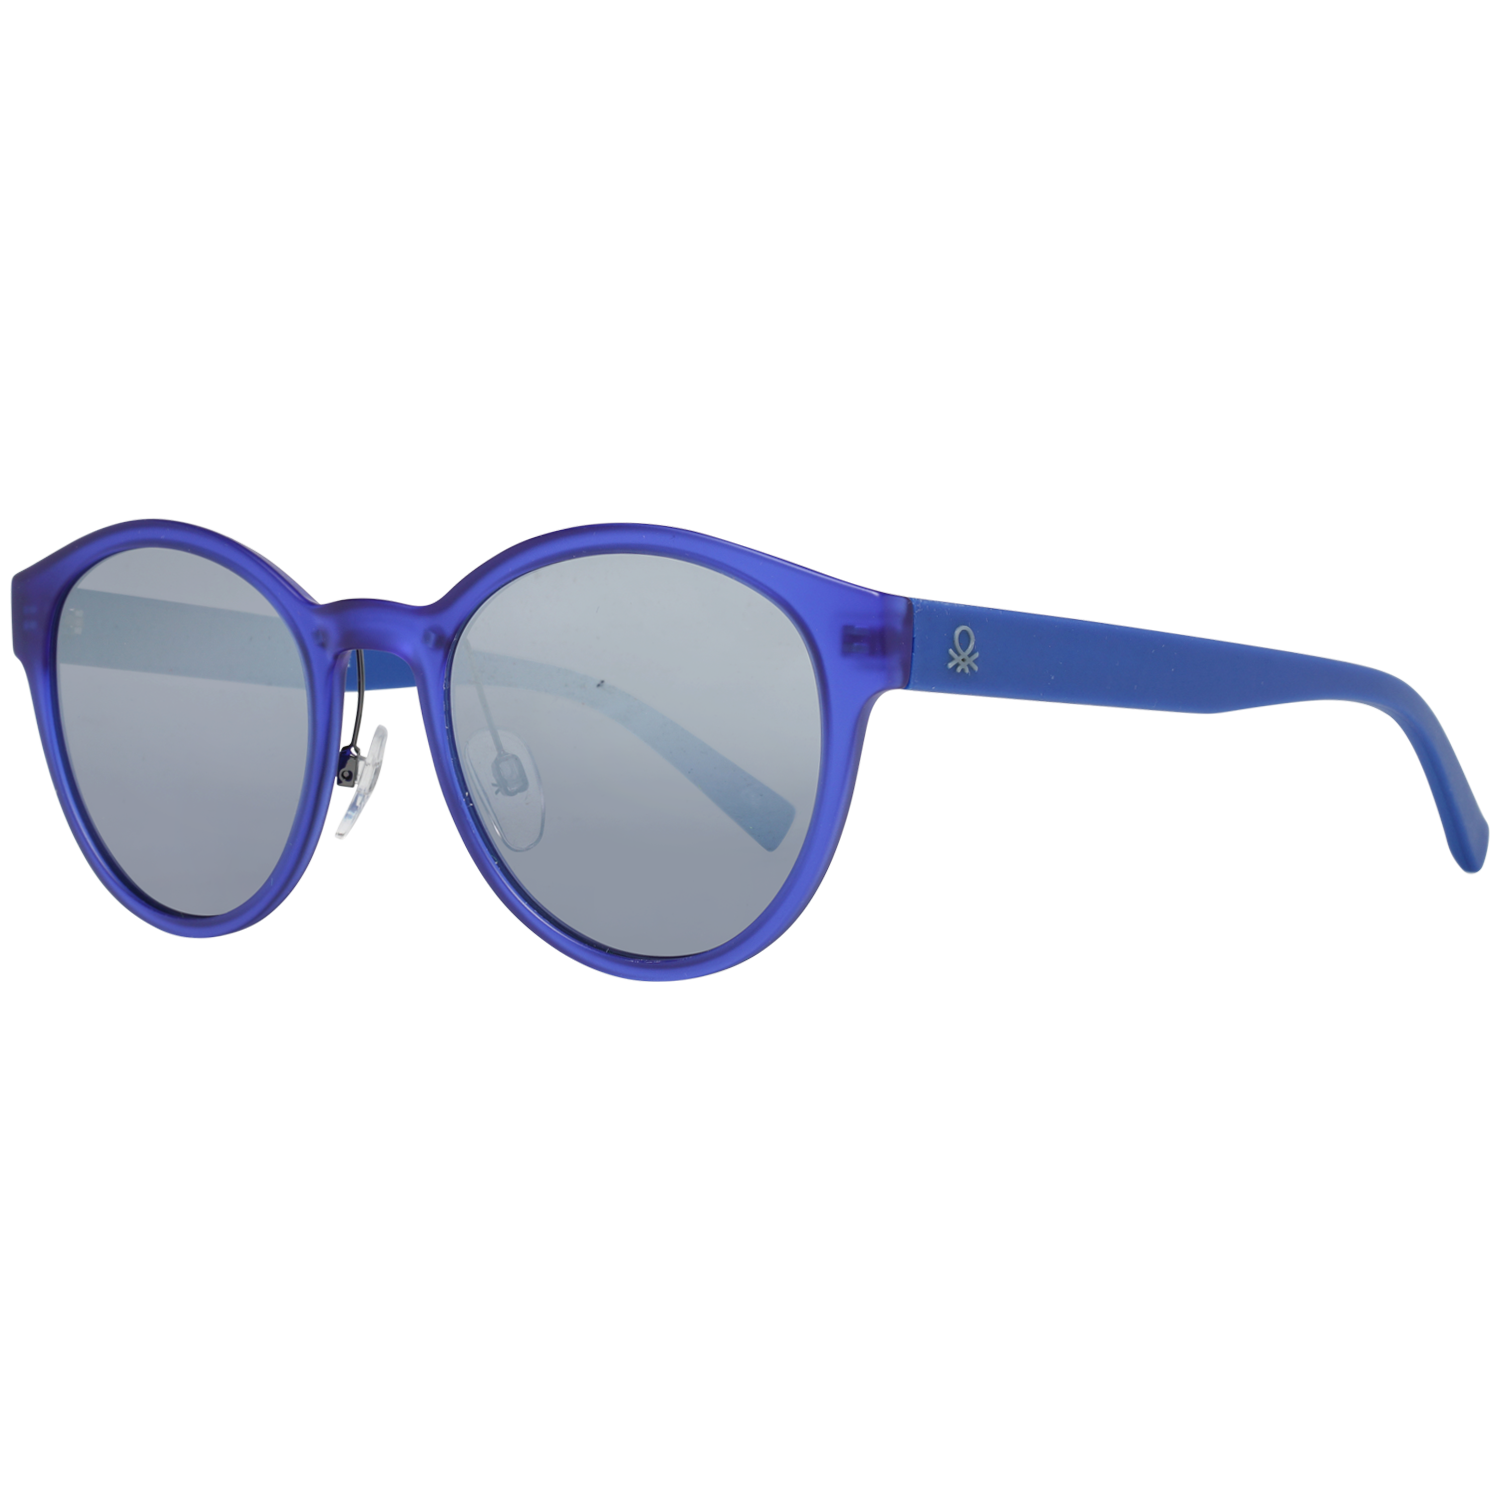 Benetton Sunglasses BE5009 603 52 Blue